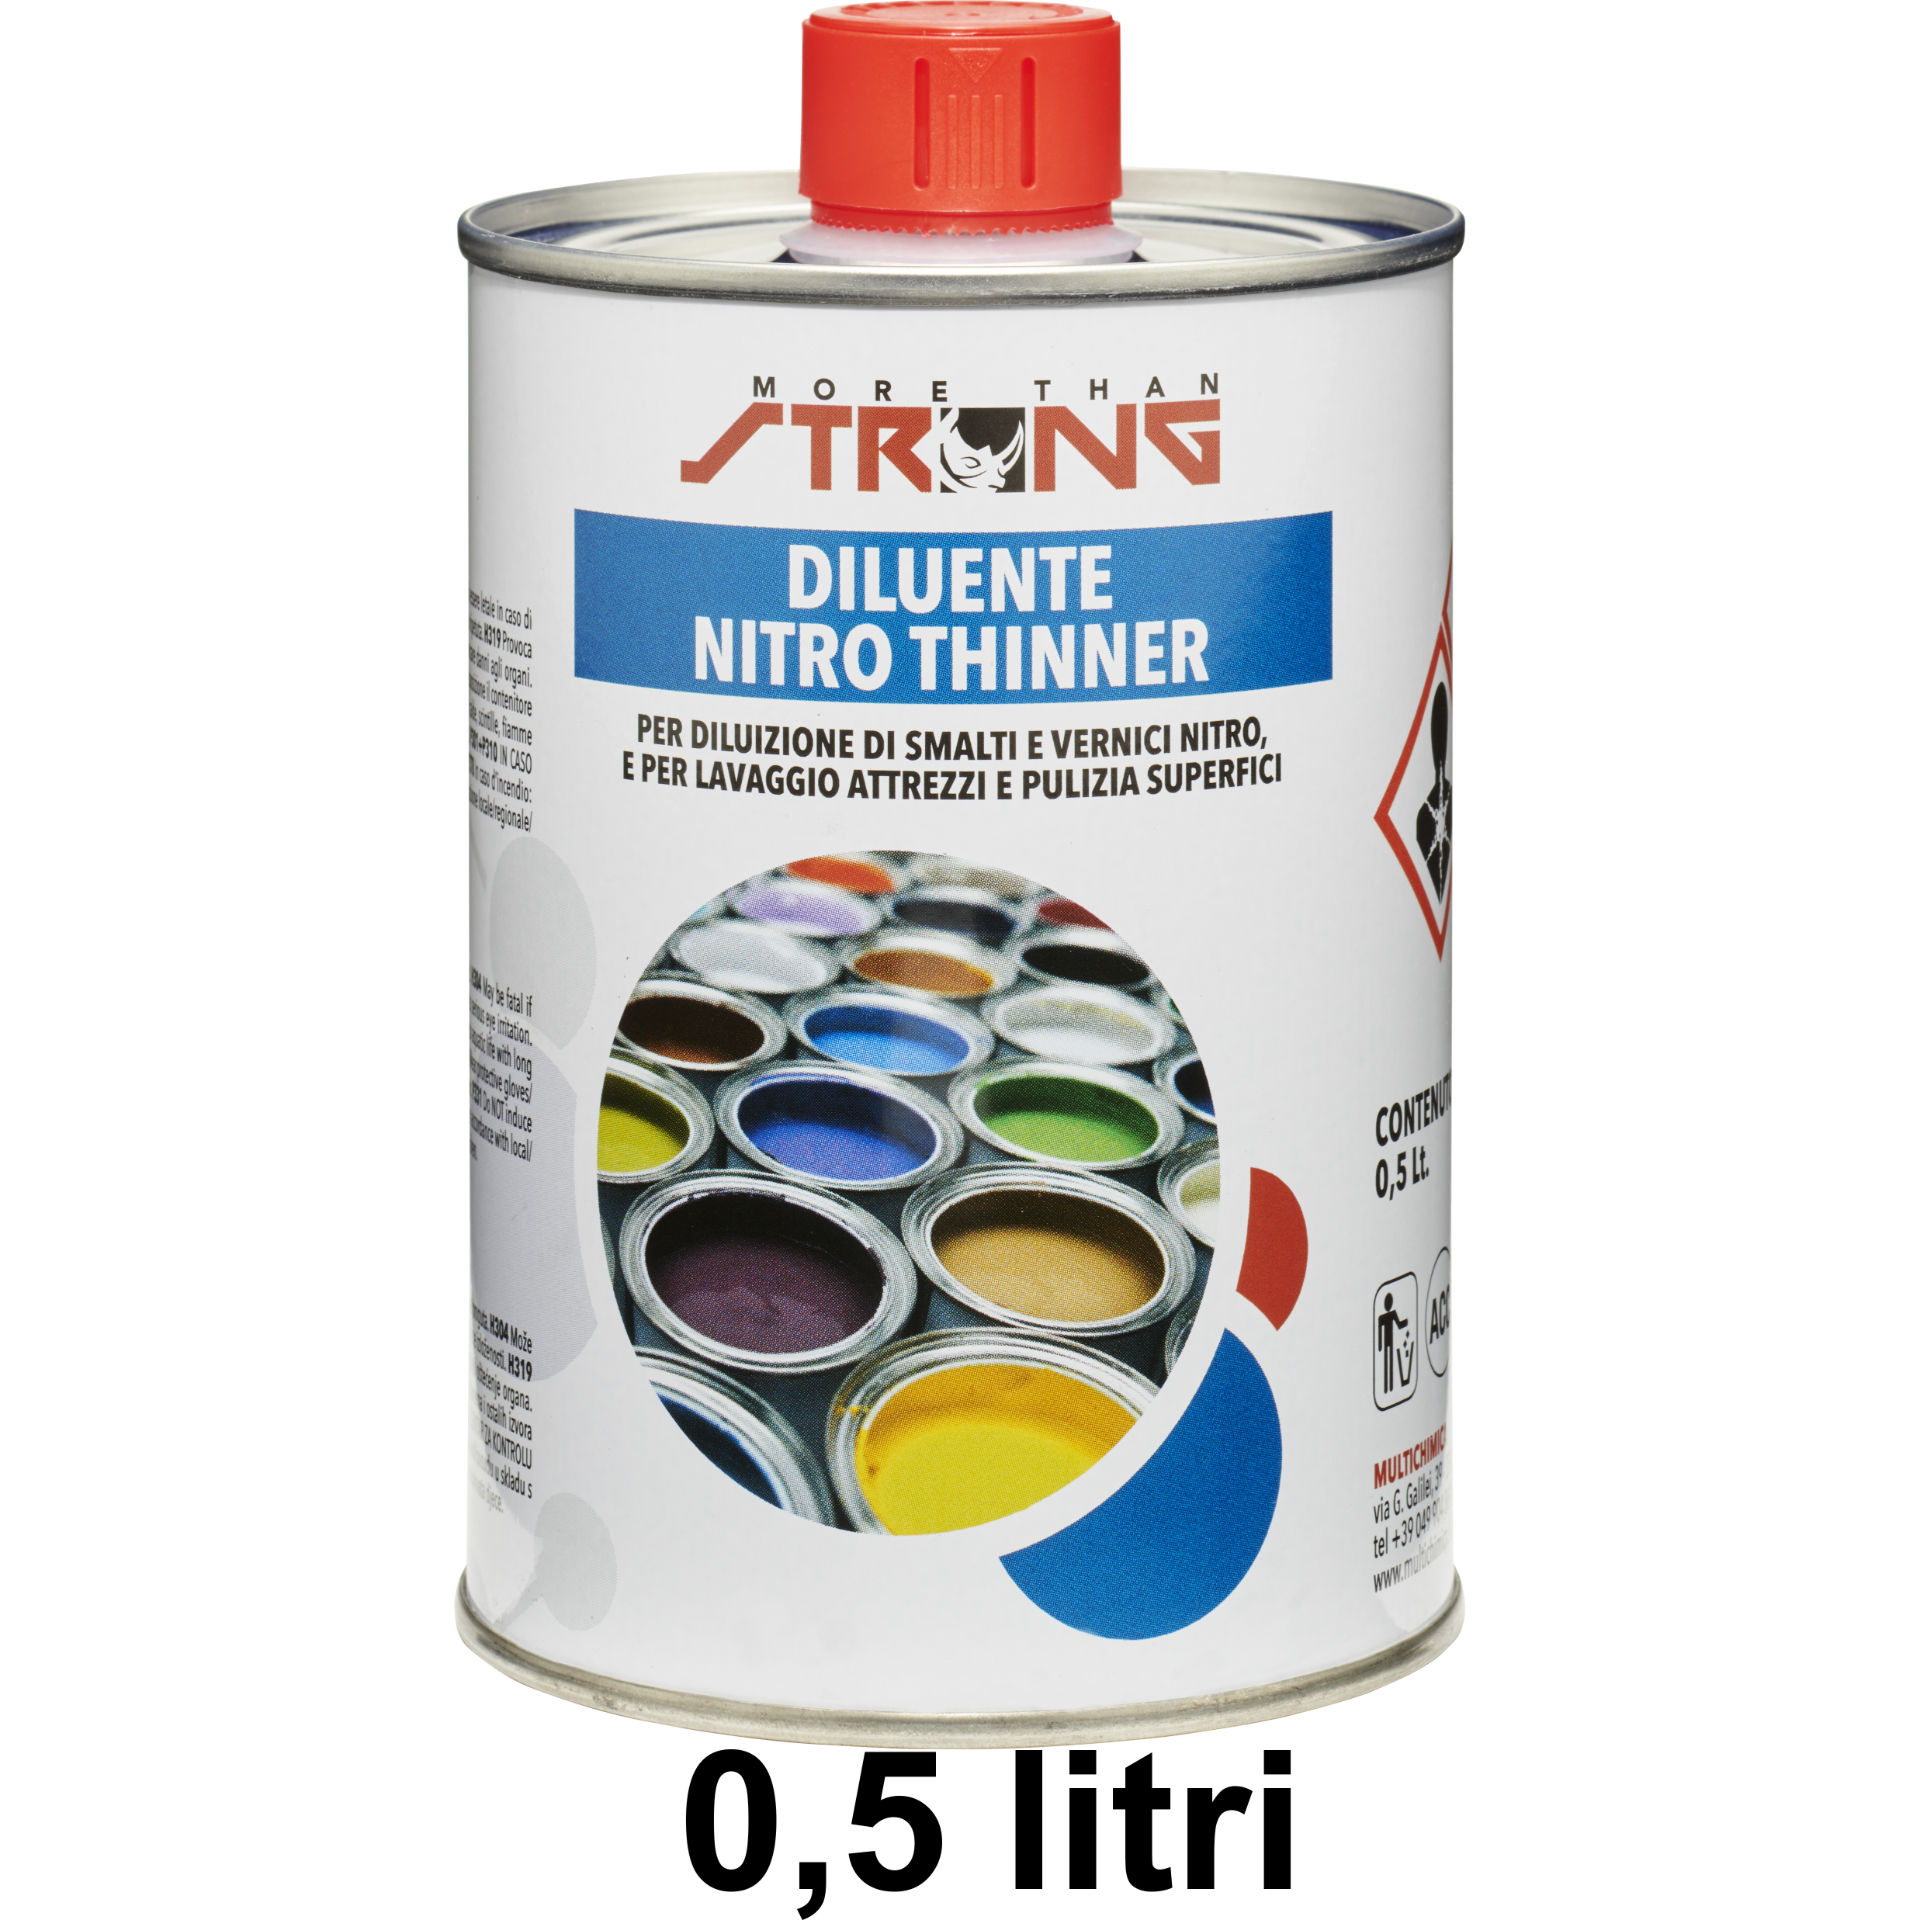 DILUENTE NITRO THINNER STRONG DA LT.1/2 (20X1/2)Nitro